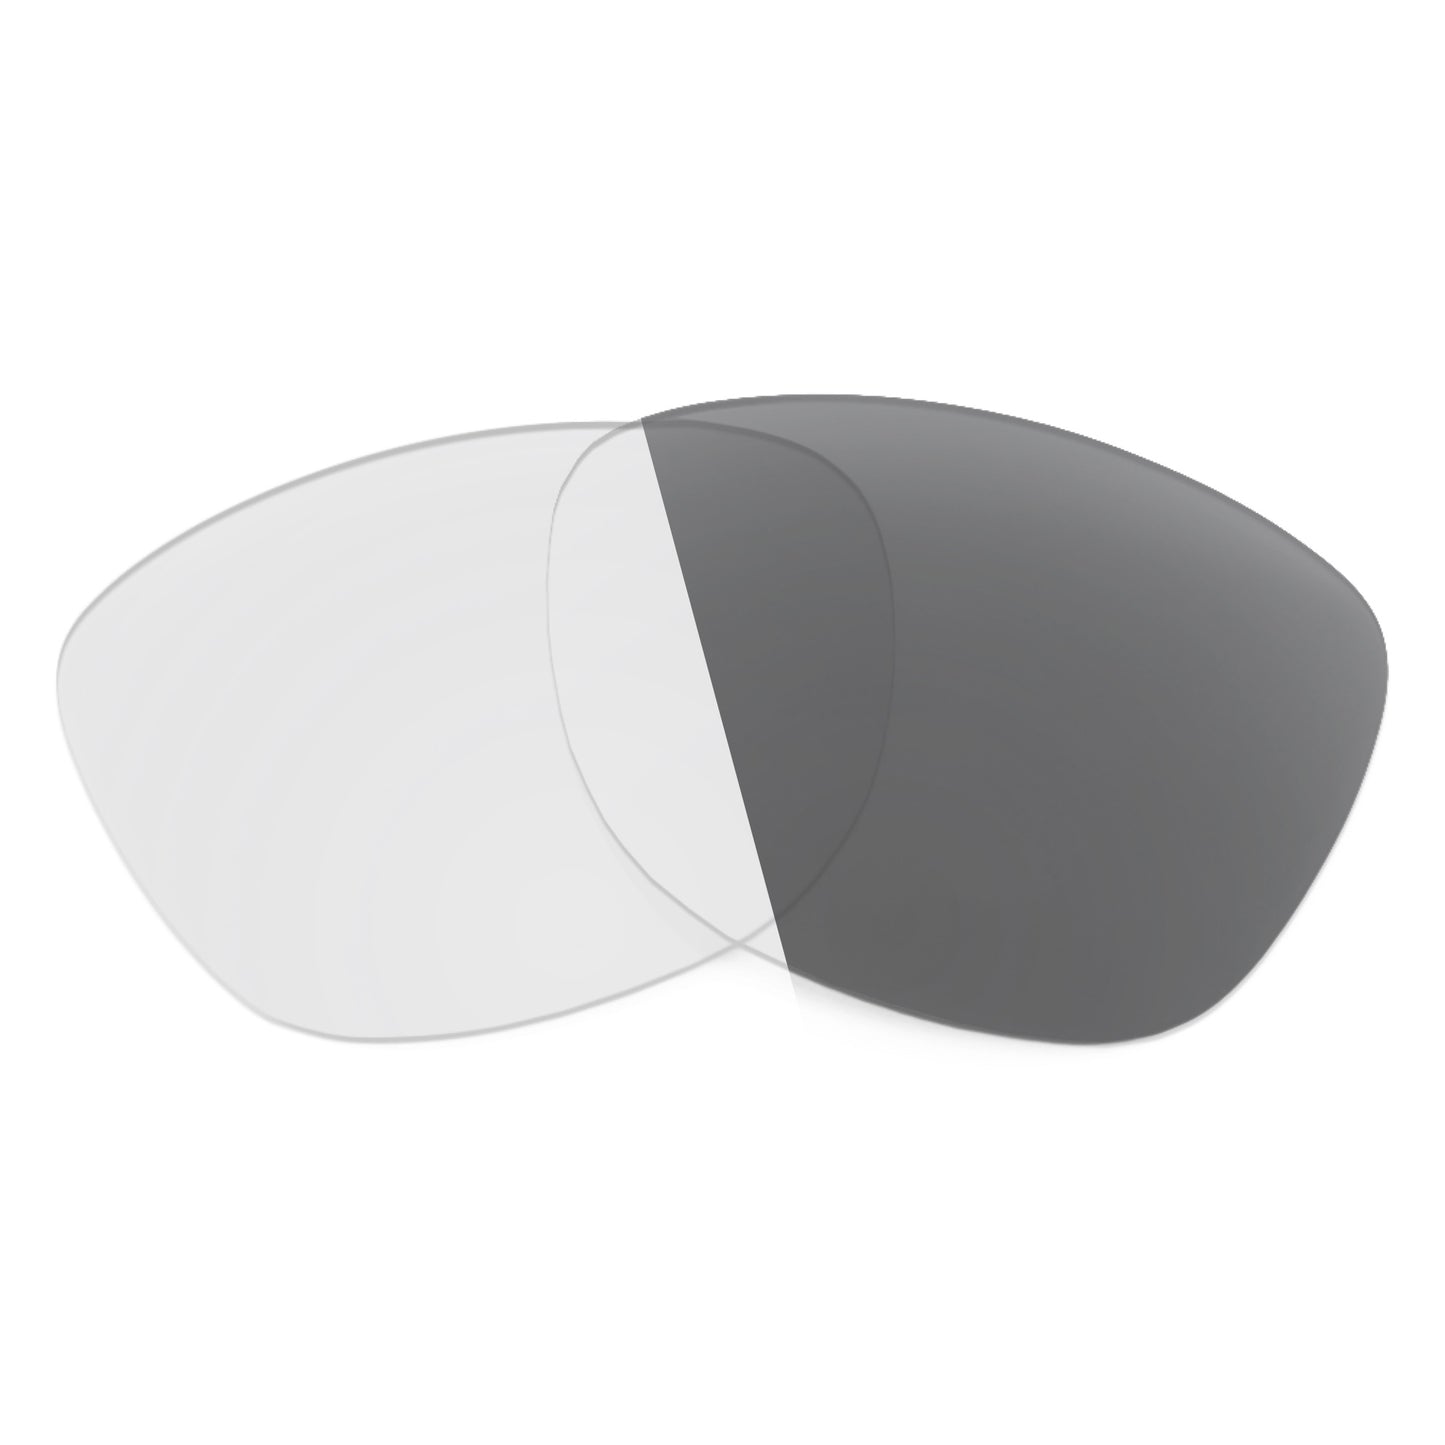 Revant replacement lenses for Spy Optic Farrah Non-Polarized Adapt Gray Photochromic